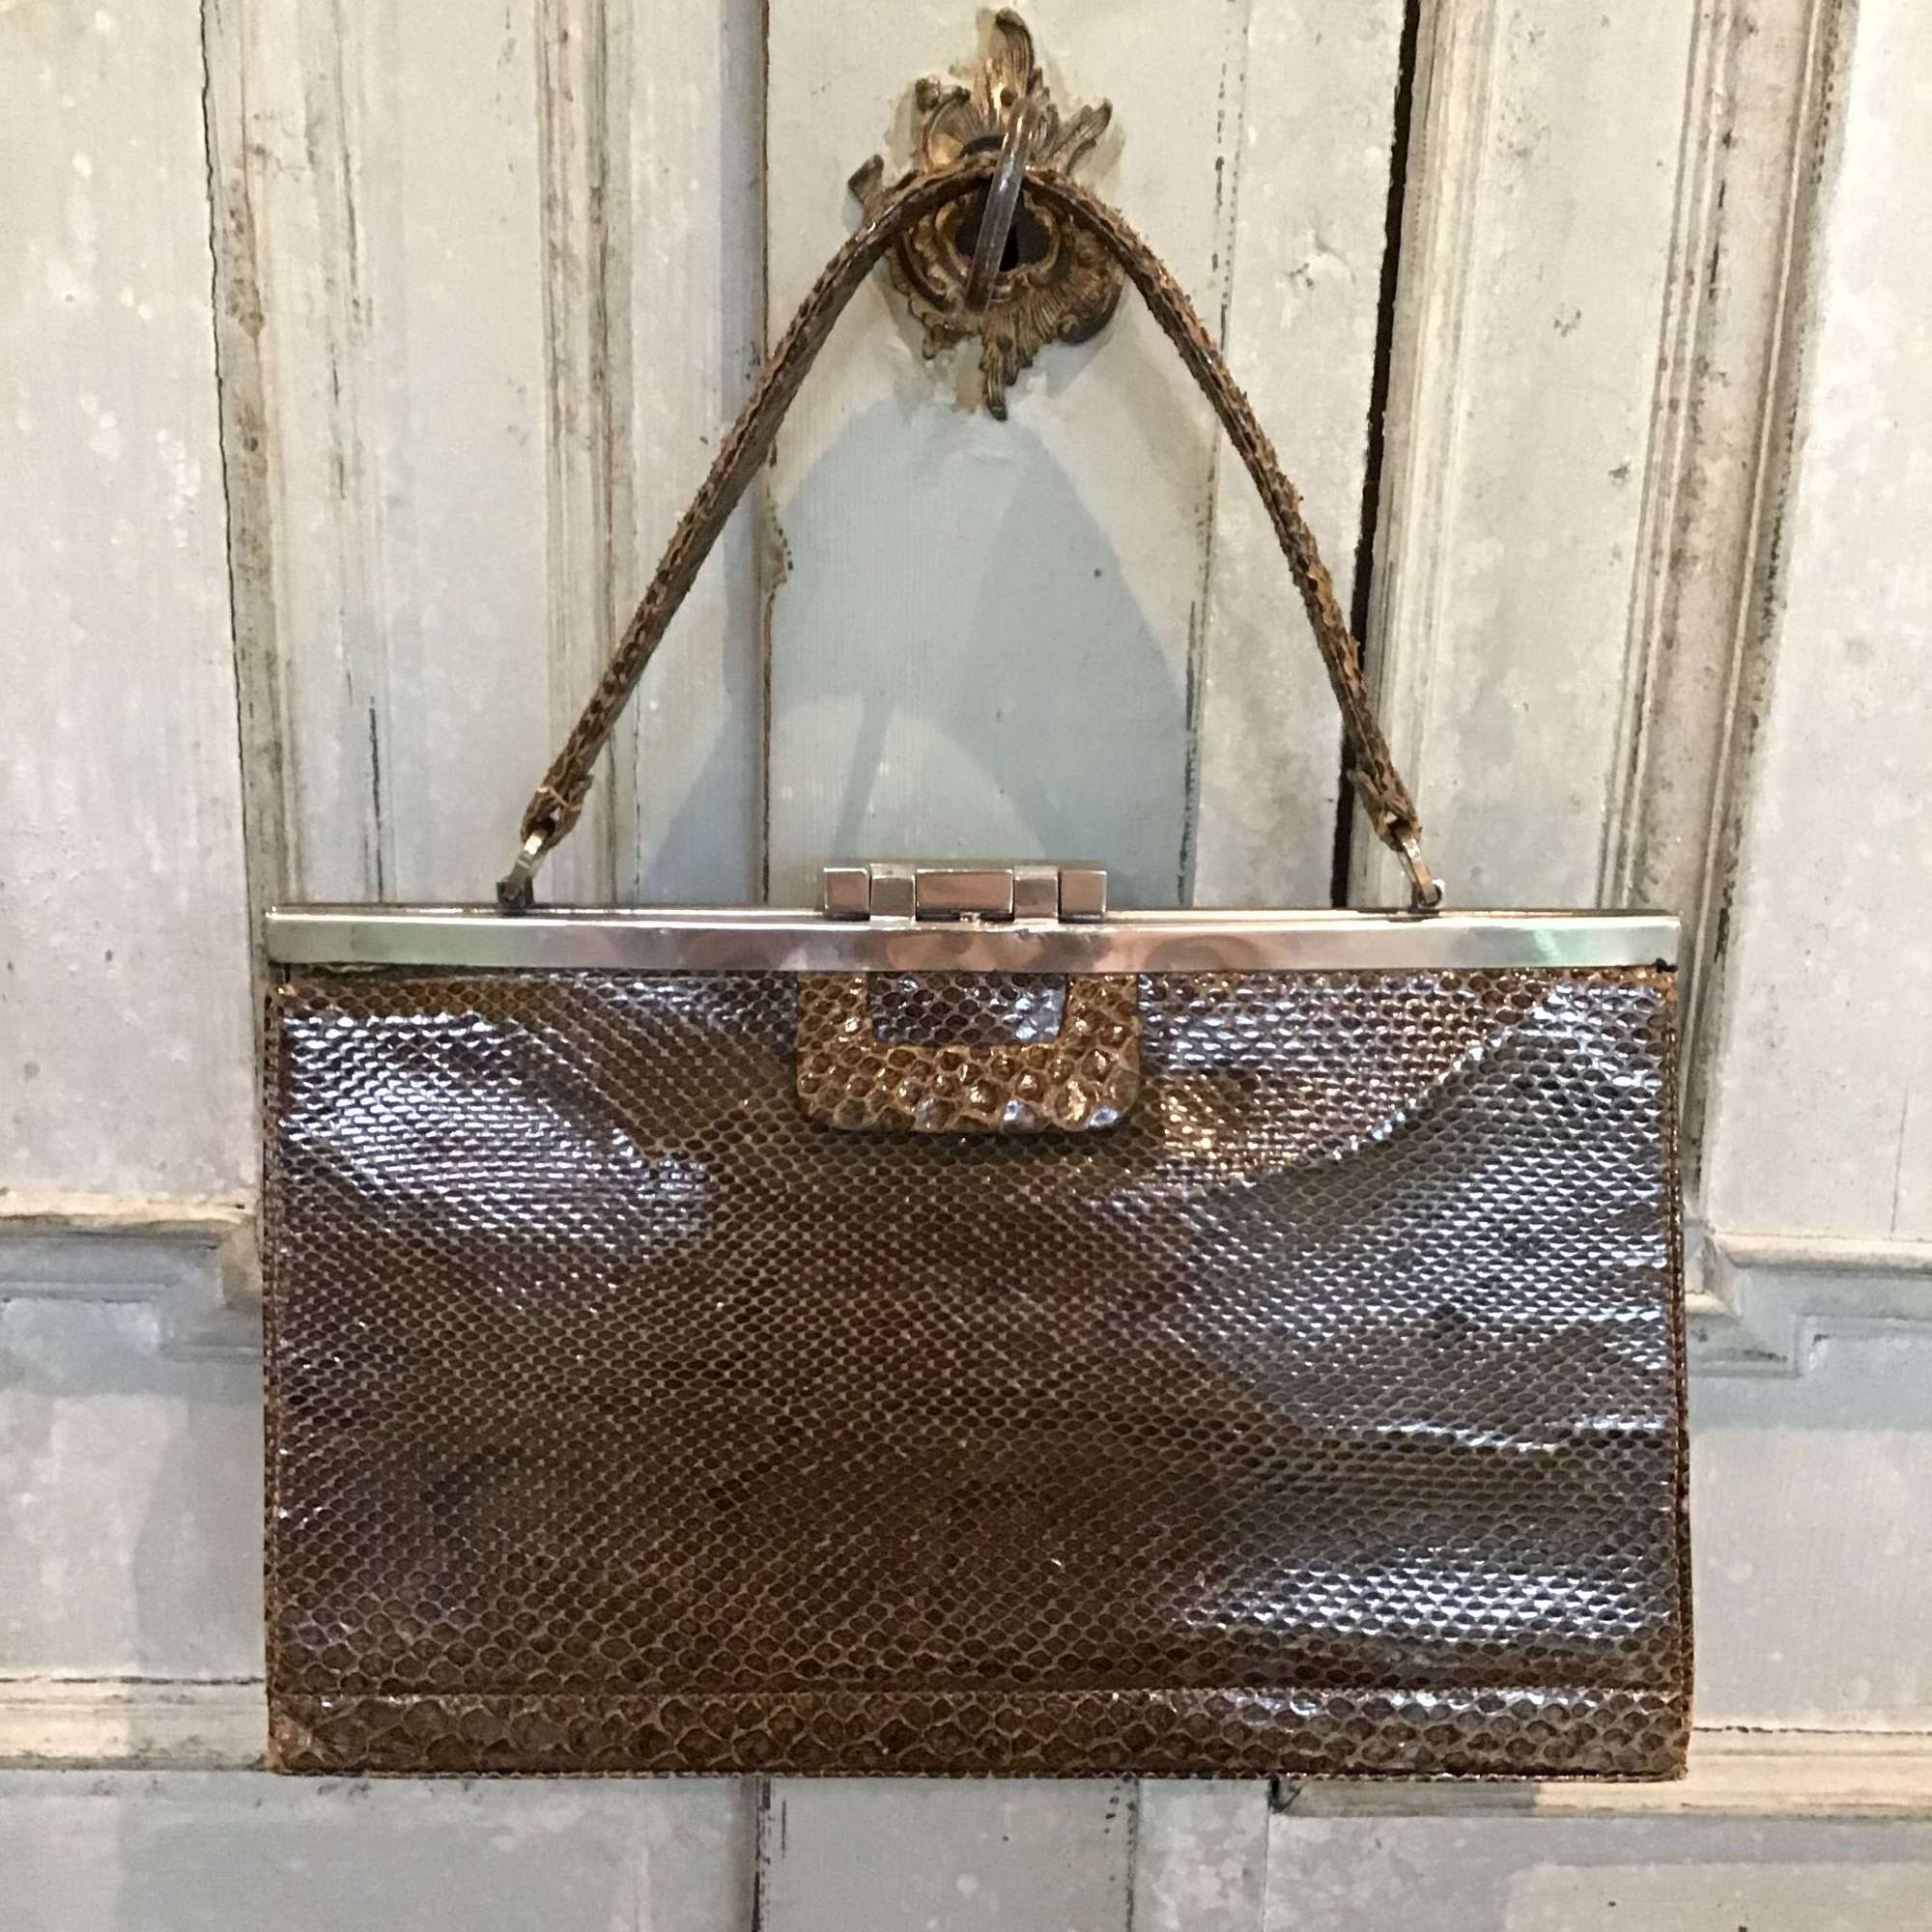 Vintage 1940s taupe/brown snakeskin handbag with silver hardware